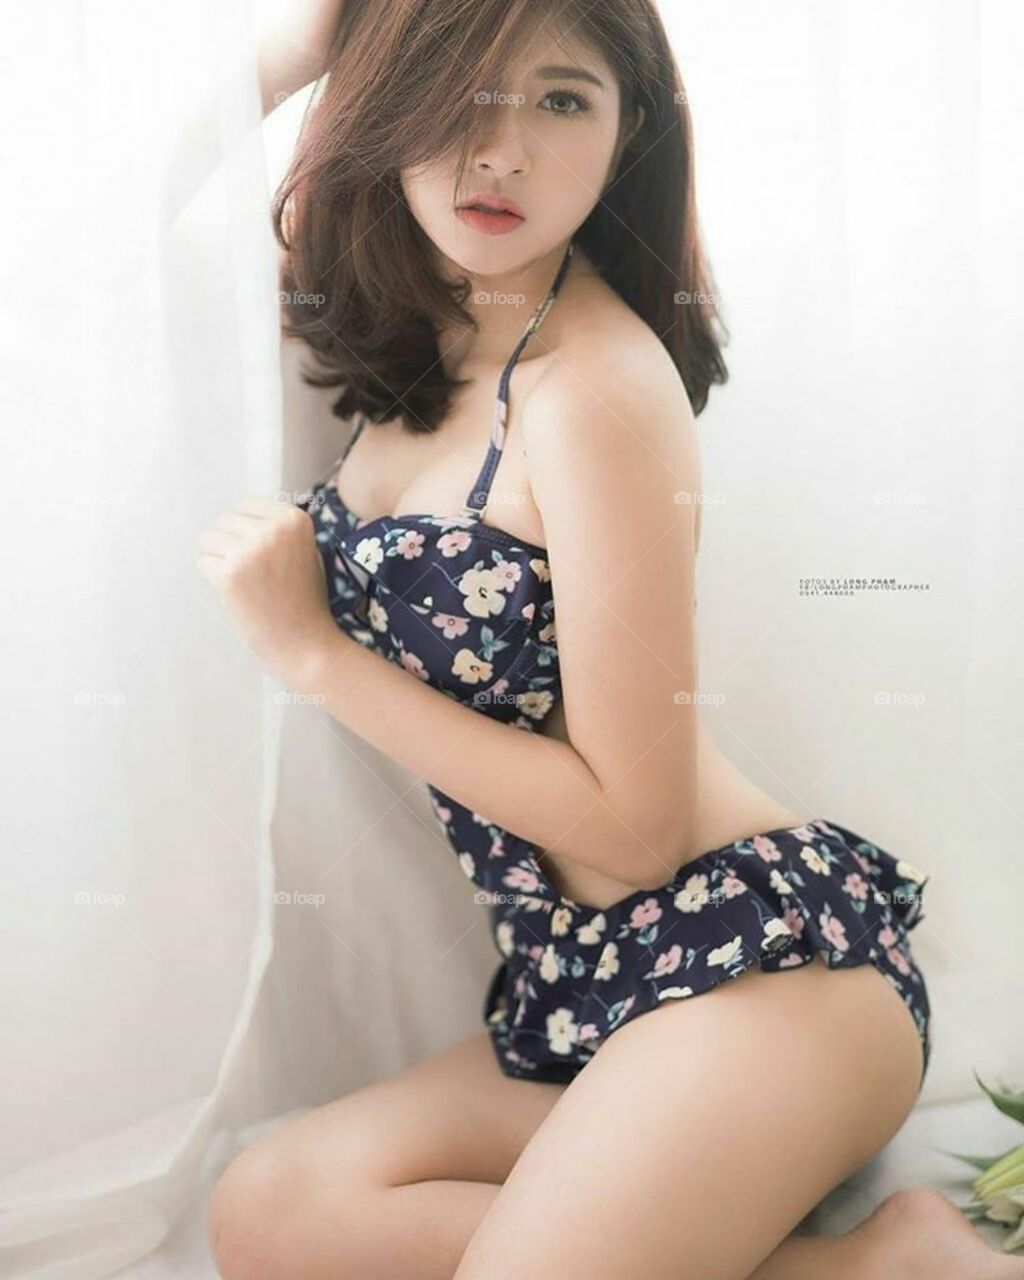 Hot Asian Nude Body - asian hot bodies - Asian Hot Body: Free Free Hot Tube Porn ...